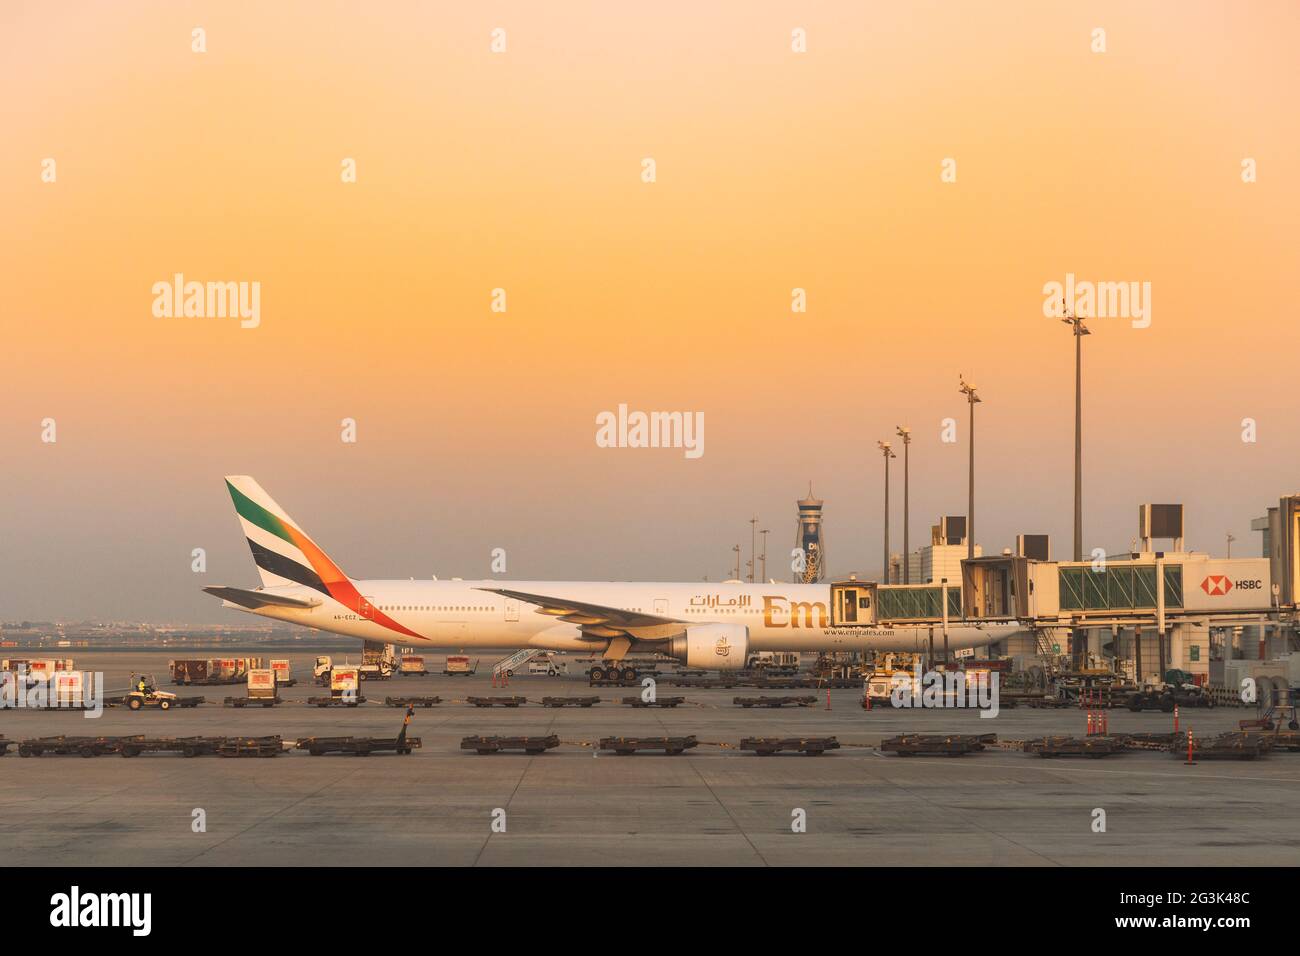 Airline Emirates Plane Stand At Dubai Airport. Dubai, United Arab Emirates Stock Photo